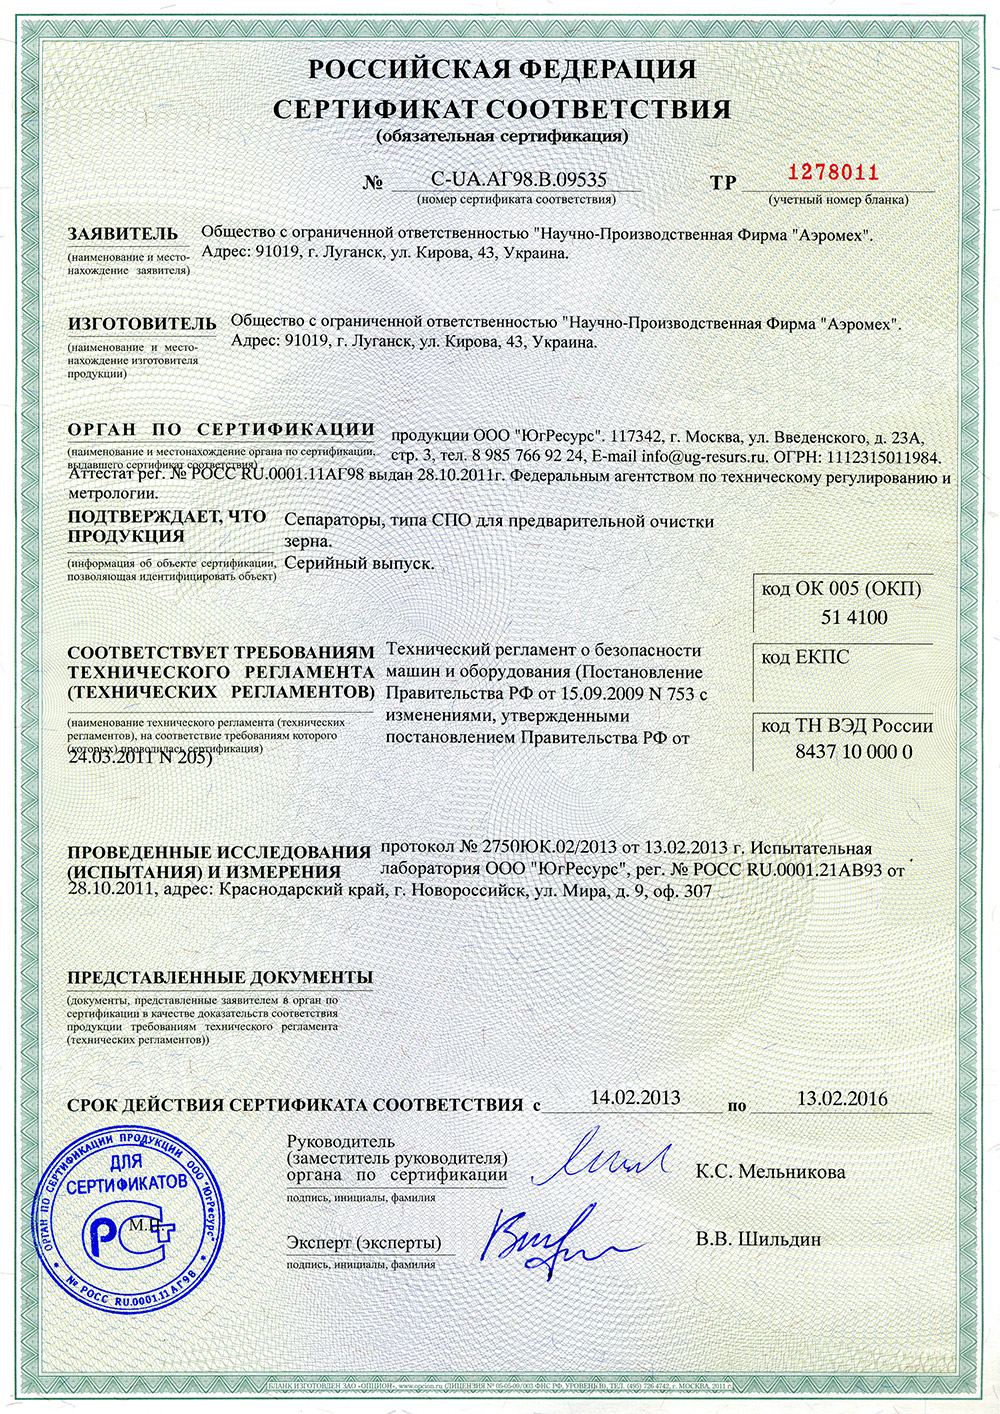 Russian certificate for SPO separators